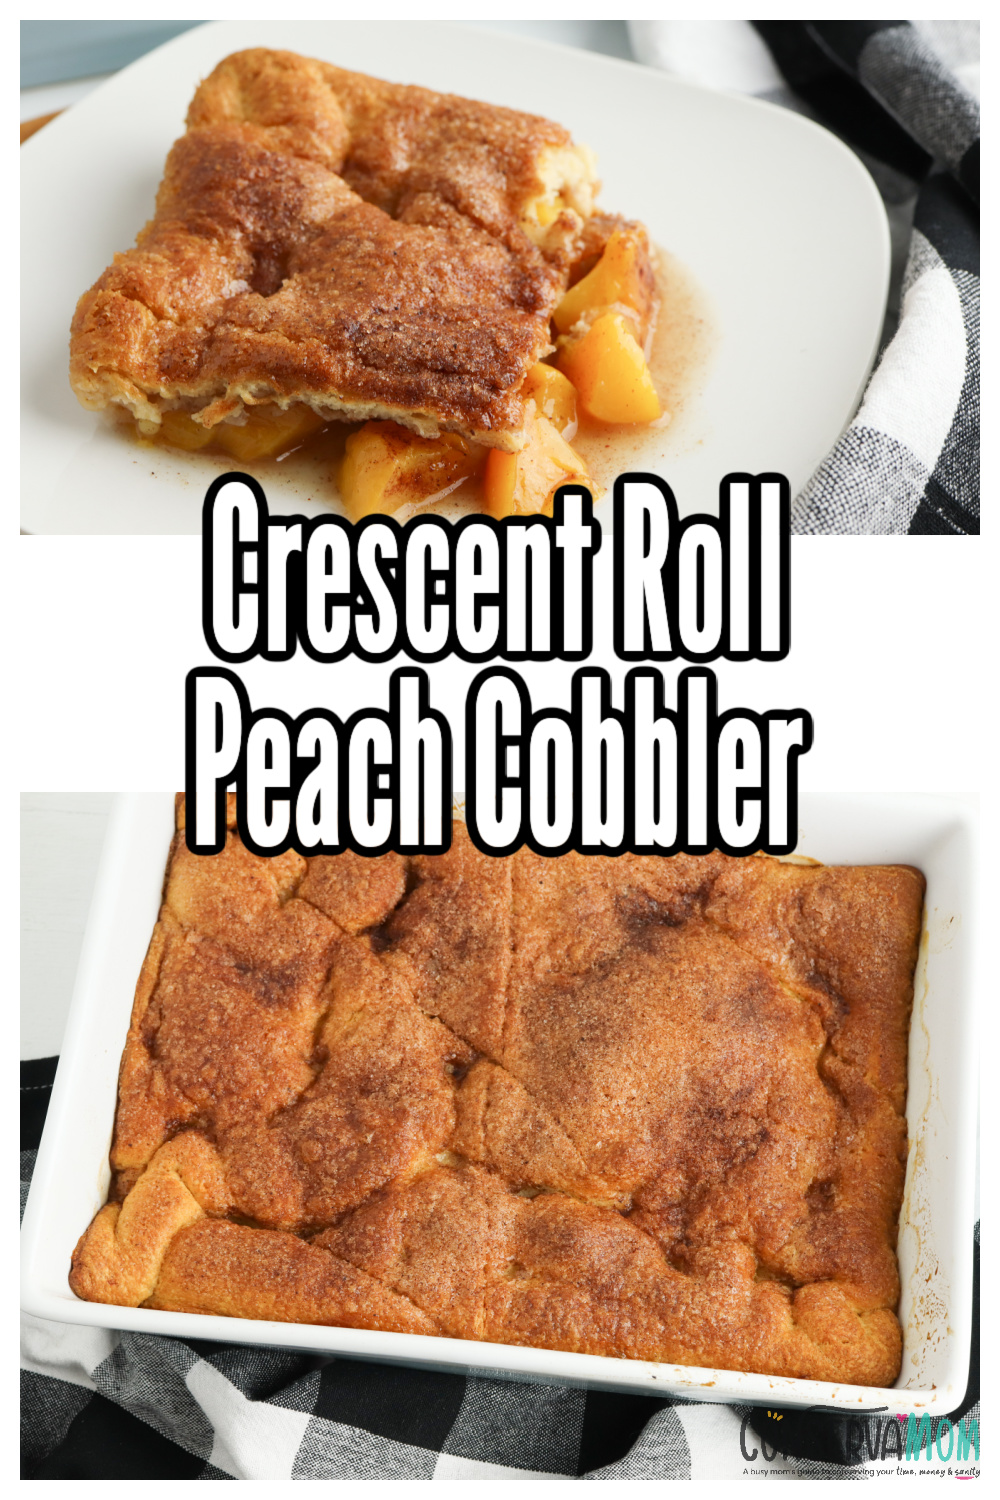 Crescent Roll Peach Cobbler